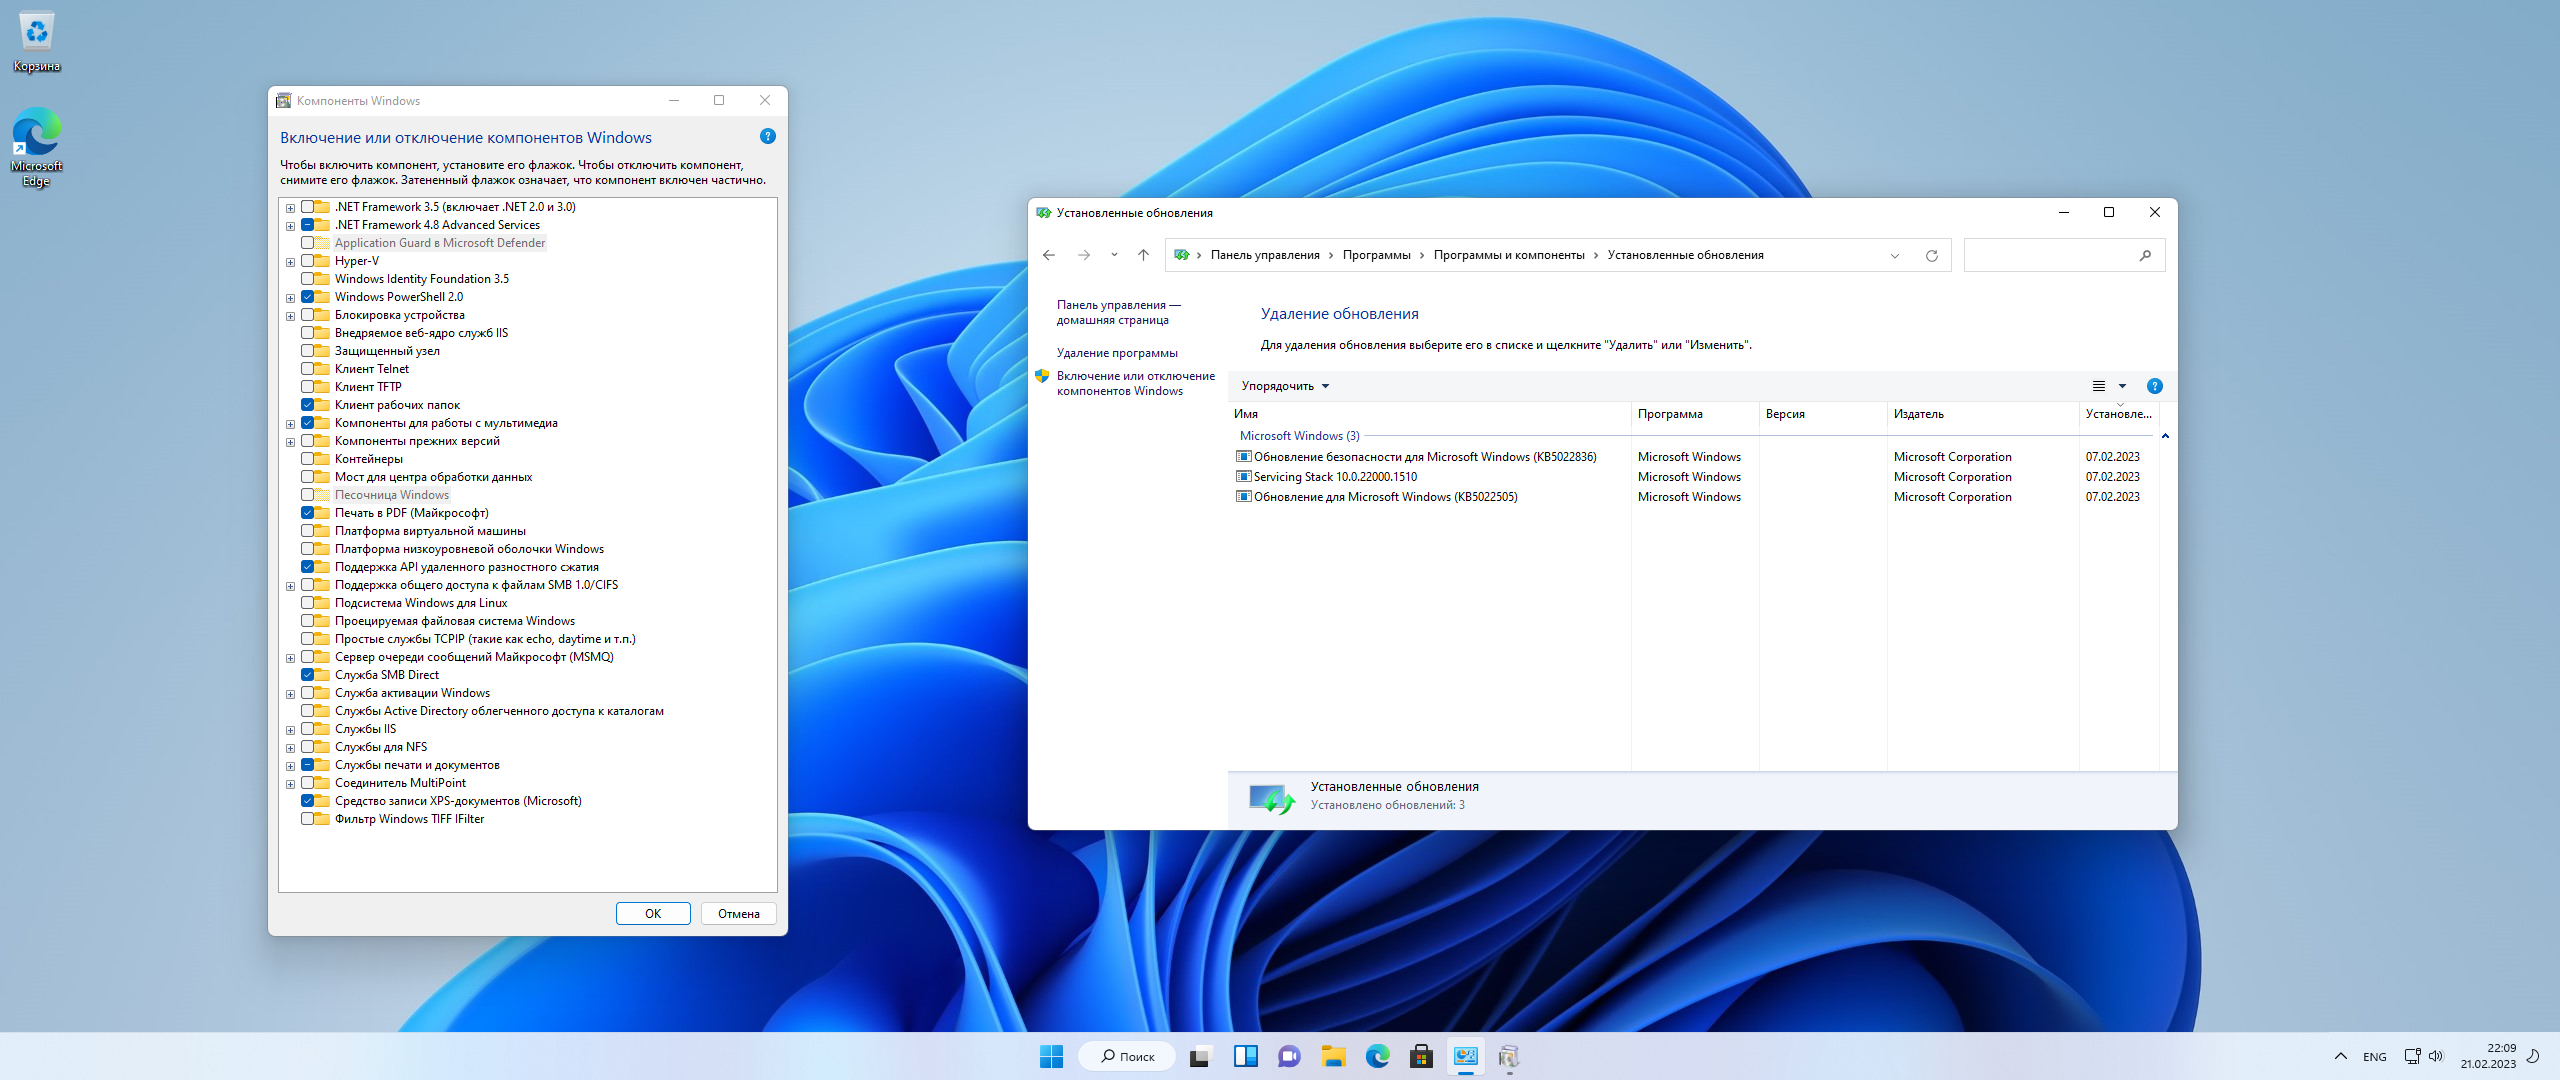 Microsoft Windows 11 [10.0.22000.1574], Version 21H2 (Updated February 2023) - Оригинальные образы от Microsoft MSDN [Ru]